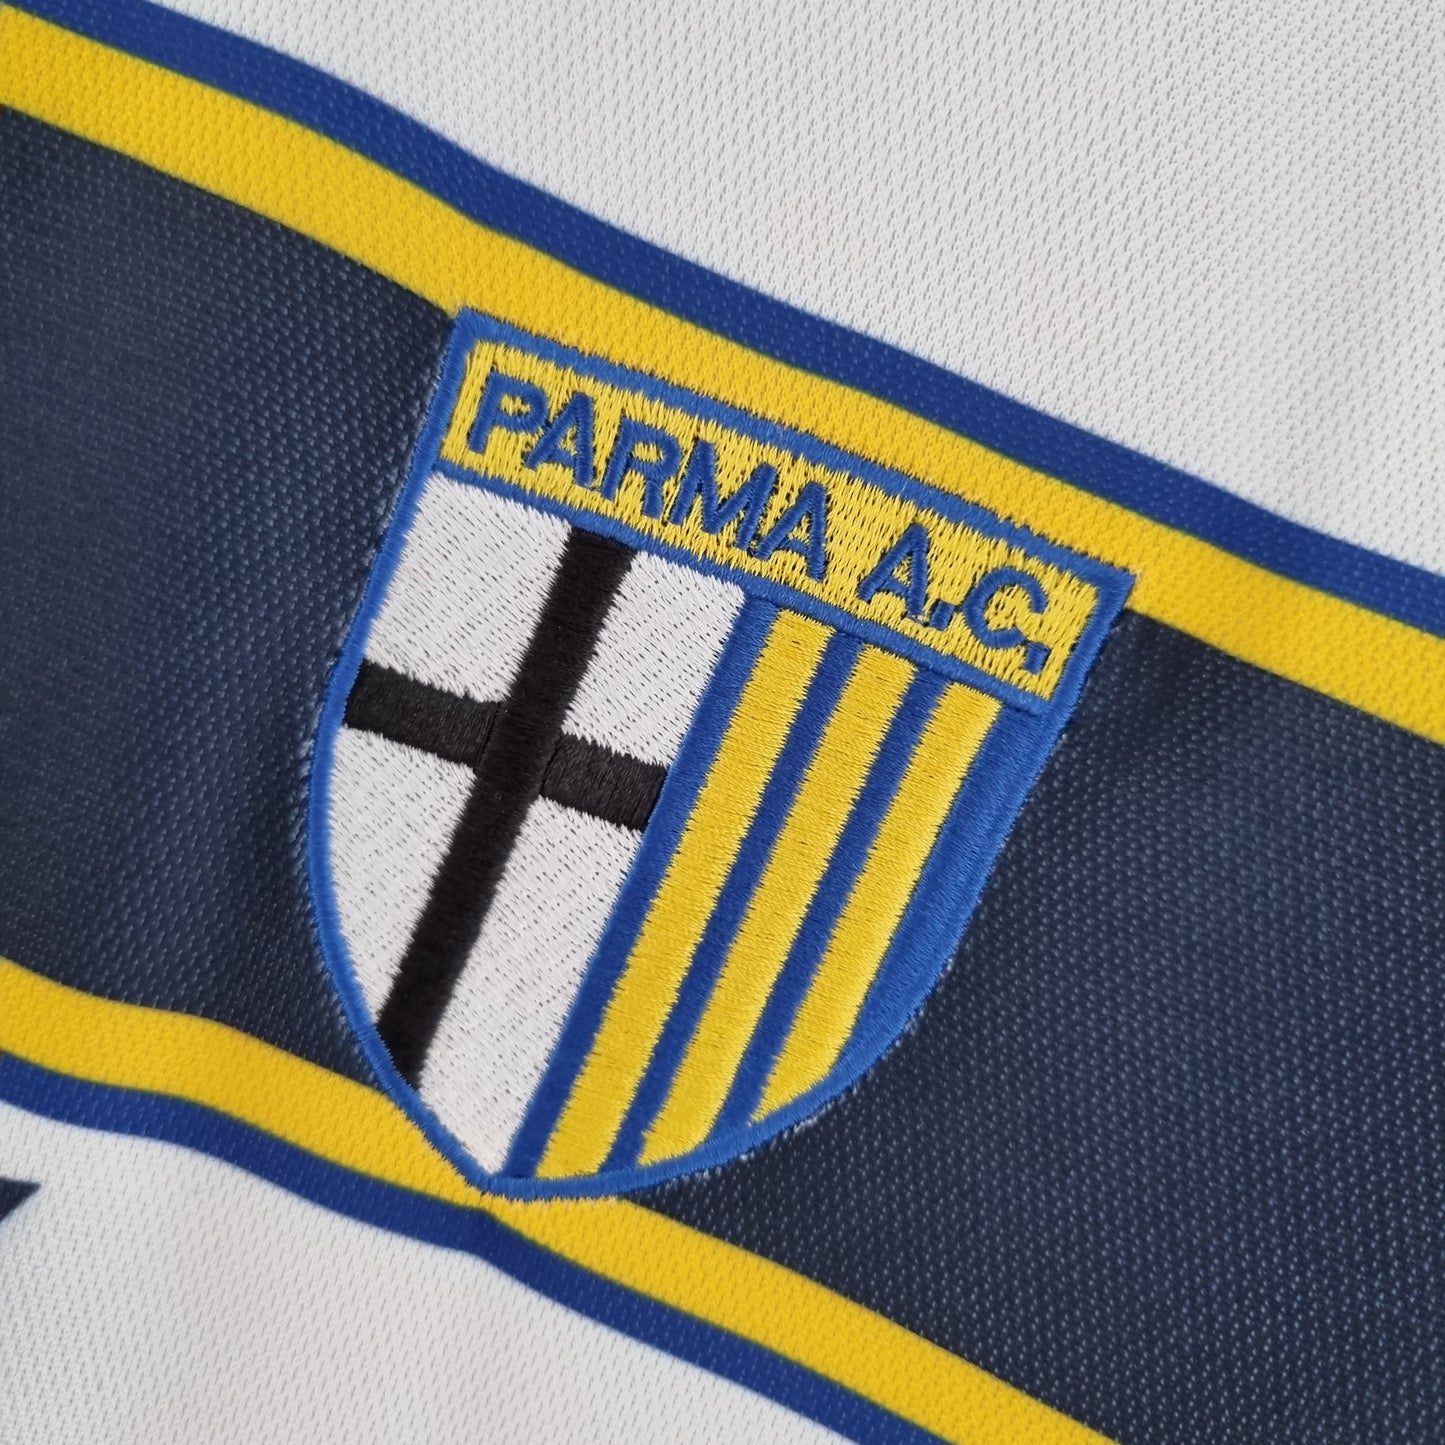 Camisa Retrô Parma Away 2001/02